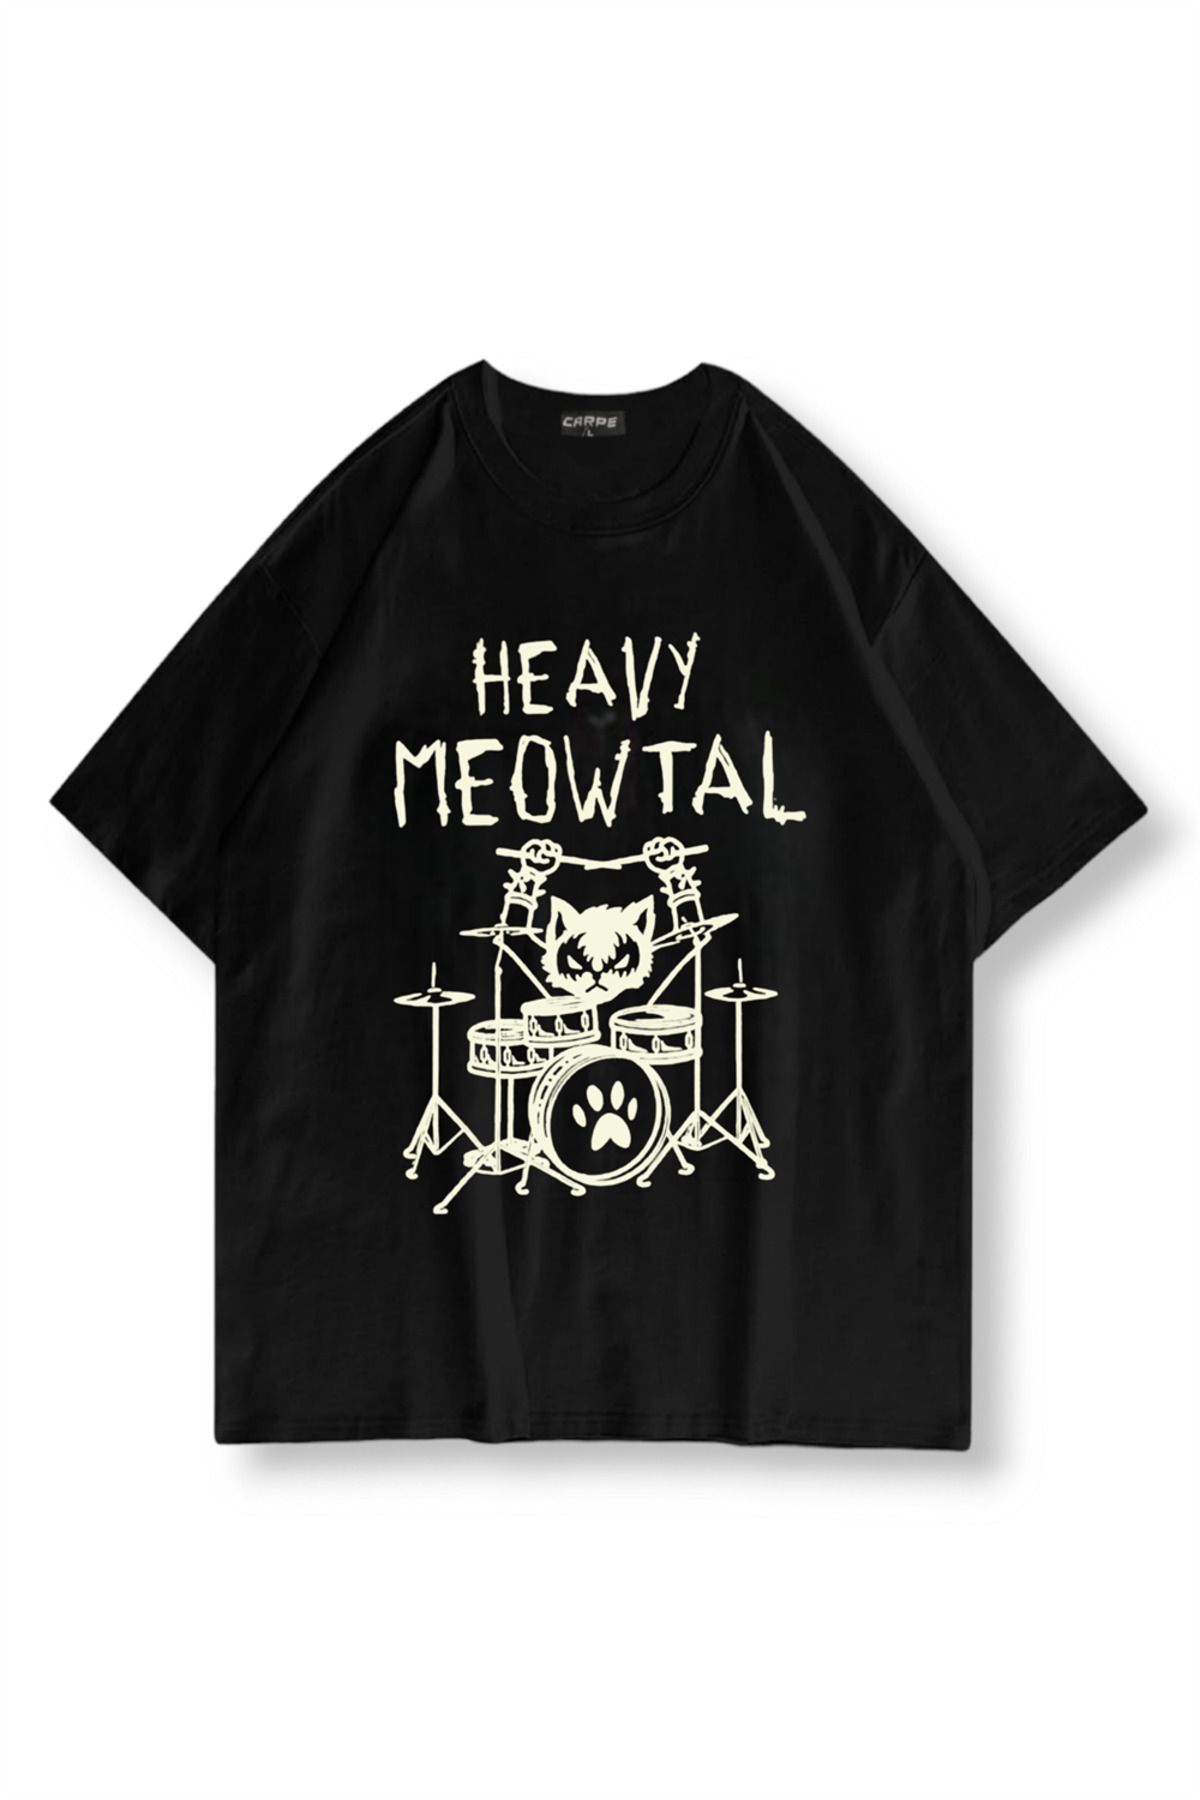 Carpe Heavy Meowtal Oversize T-shirt